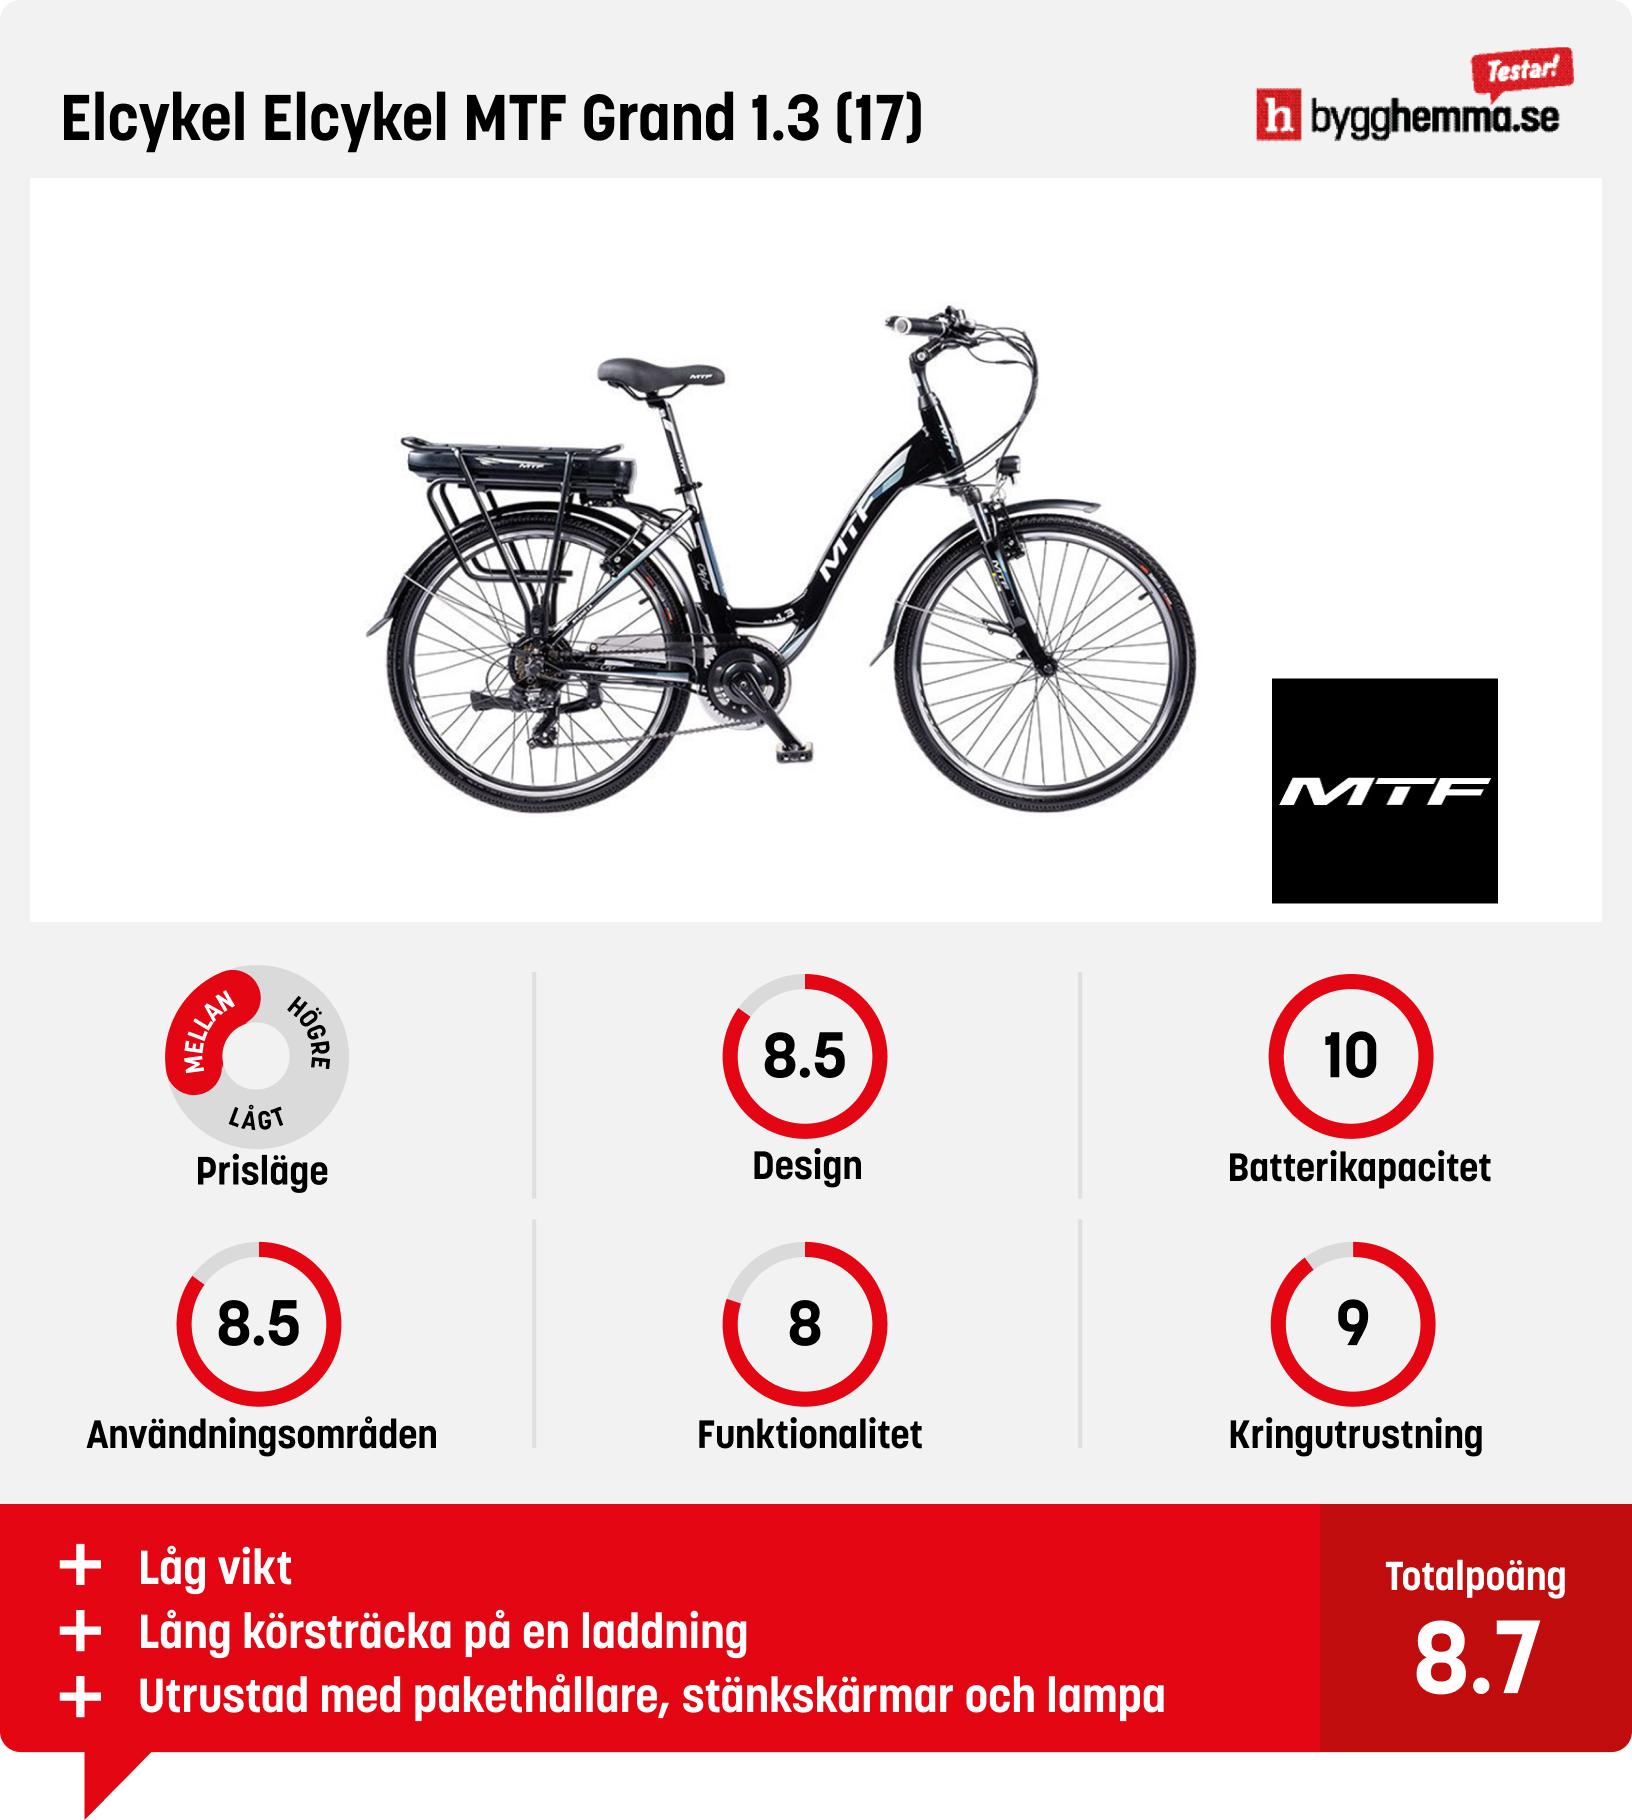 Elcykel dam bäst i test - Elcykel Elcykel MTF Grand 1.3 (17)